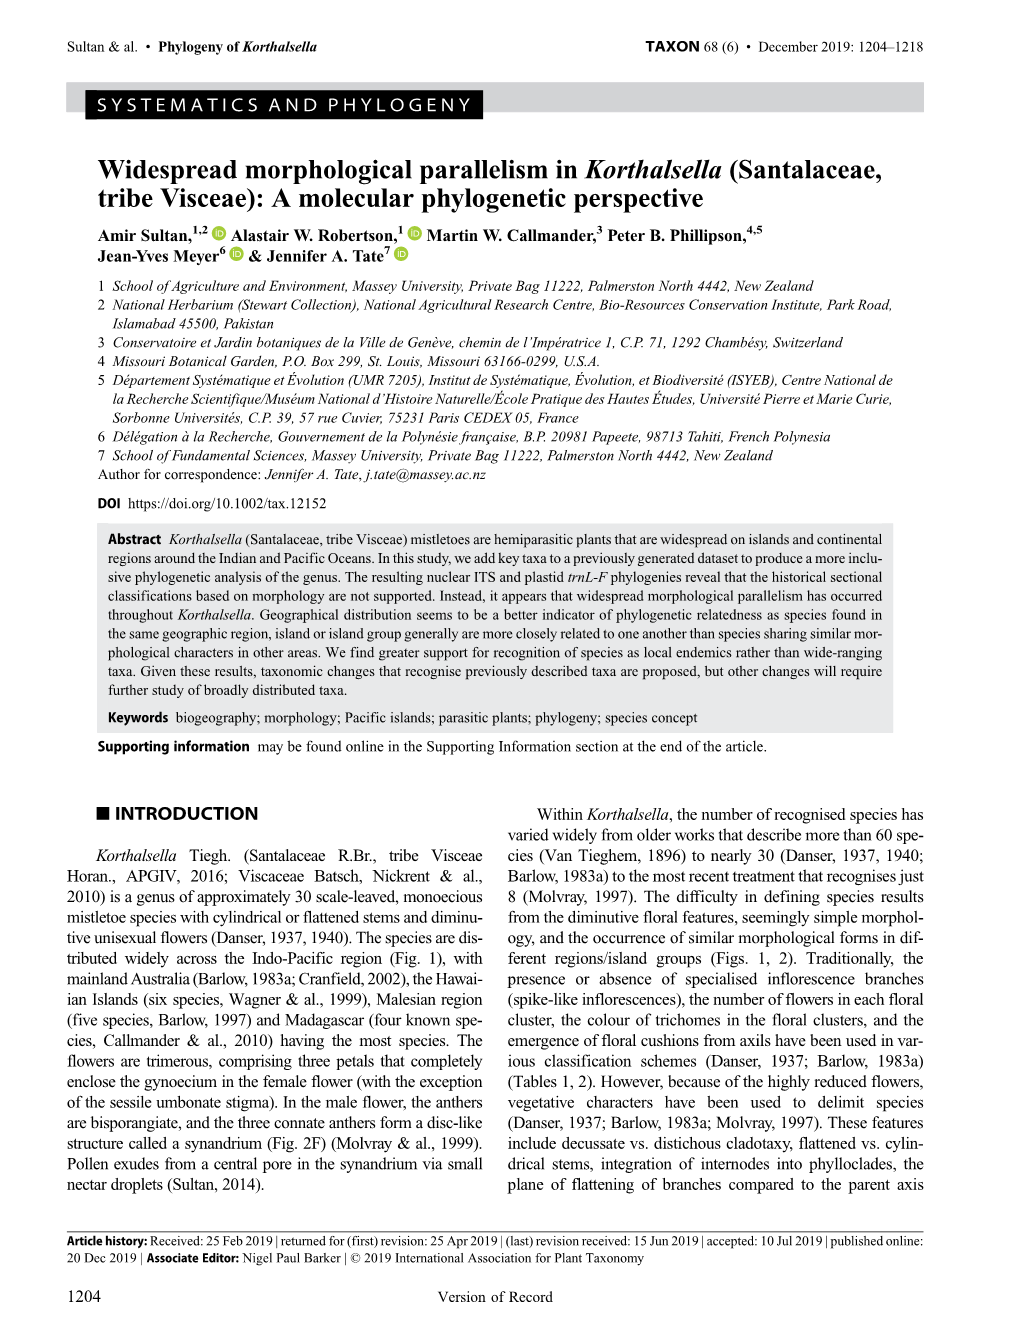 Widespread Morphological Parallelism in Korthalsella (Santalaceae, Tribe Visceae): a Molecular Phylogenetic Perspective Amir Sultan,1,2 Alastair W